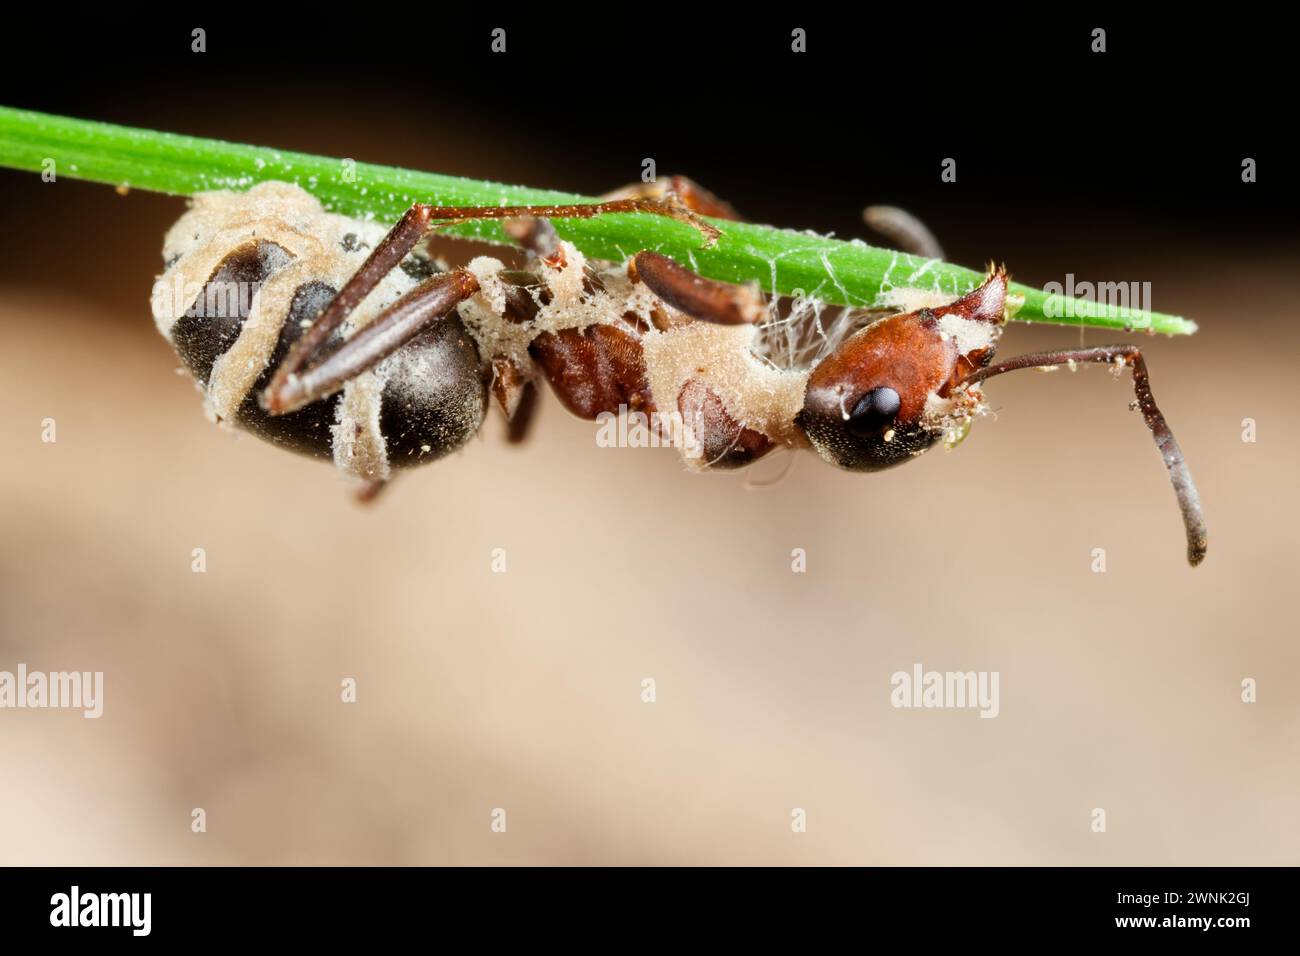 Ameisenpilz (Pandora myrmecophaga / Formicae) Stockfoto